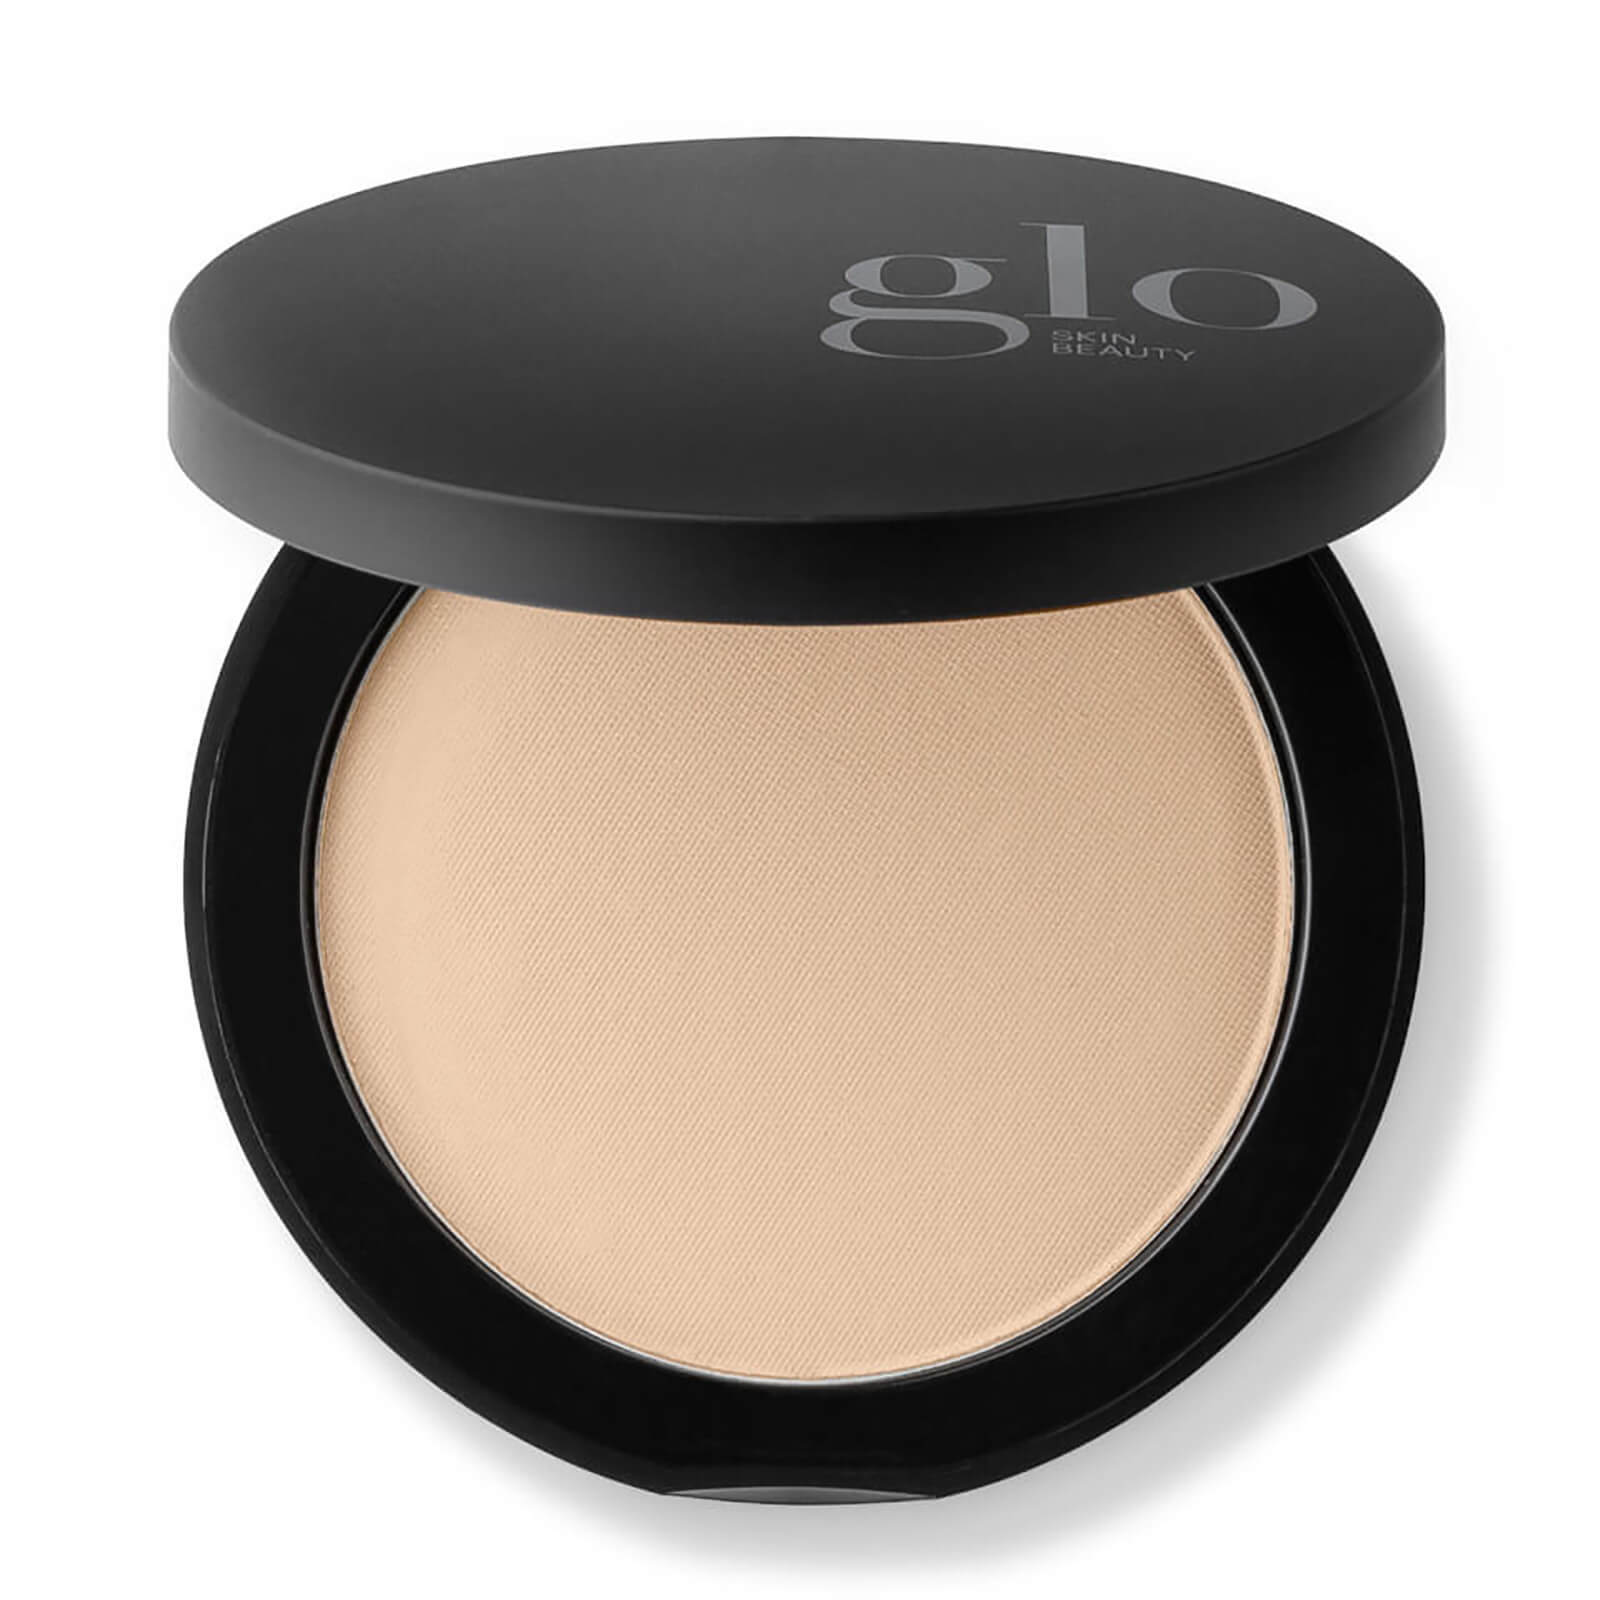 Glo Skin Beauty Pressed Base Powder Foundation (0.35 Oz.) In Natural Medium